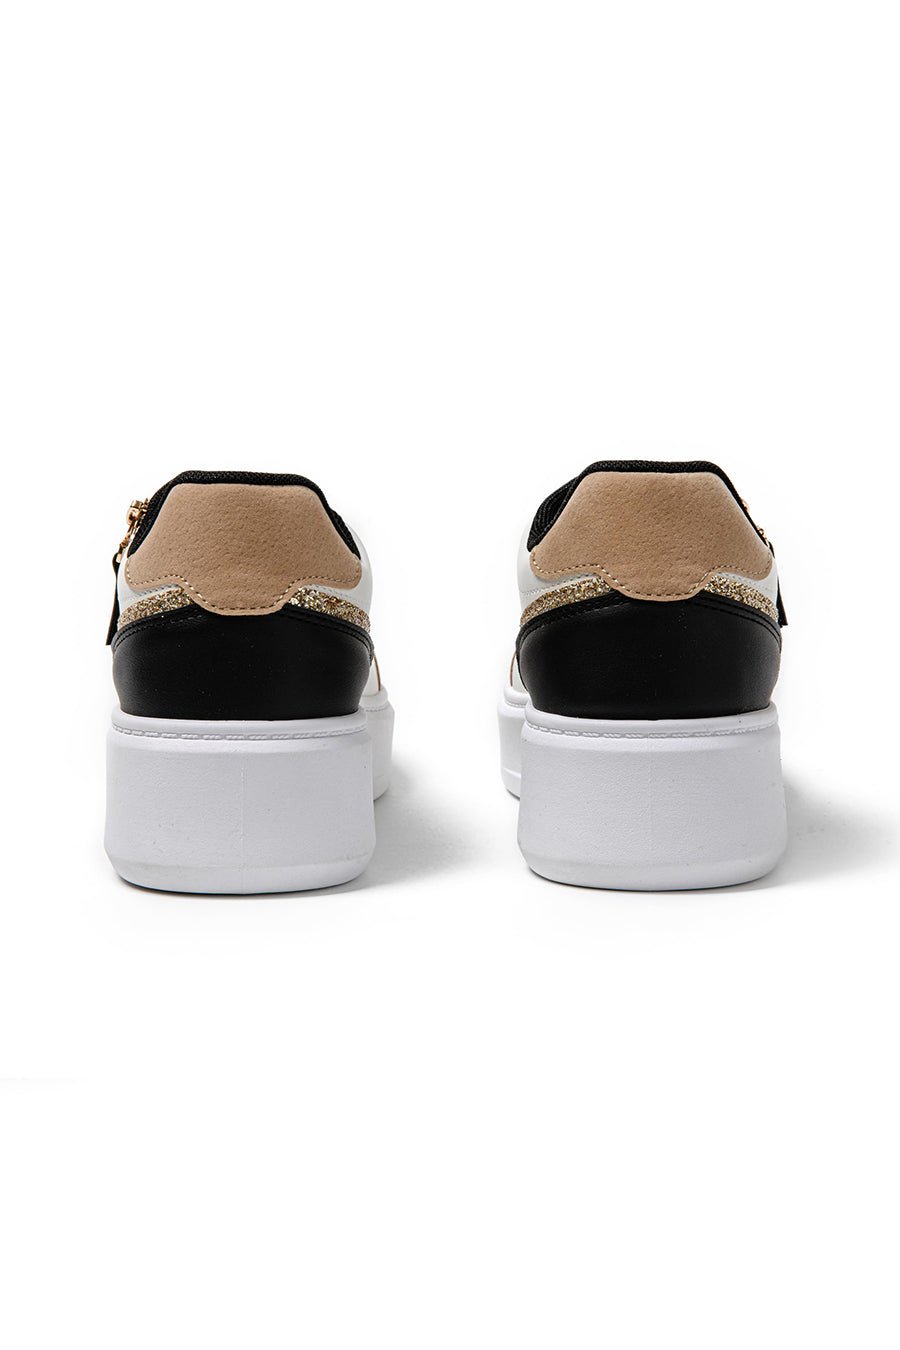 JOMIX Sneakers Donna Casual Scarpe Eleganti Sportive Comode da Camminata SD9809